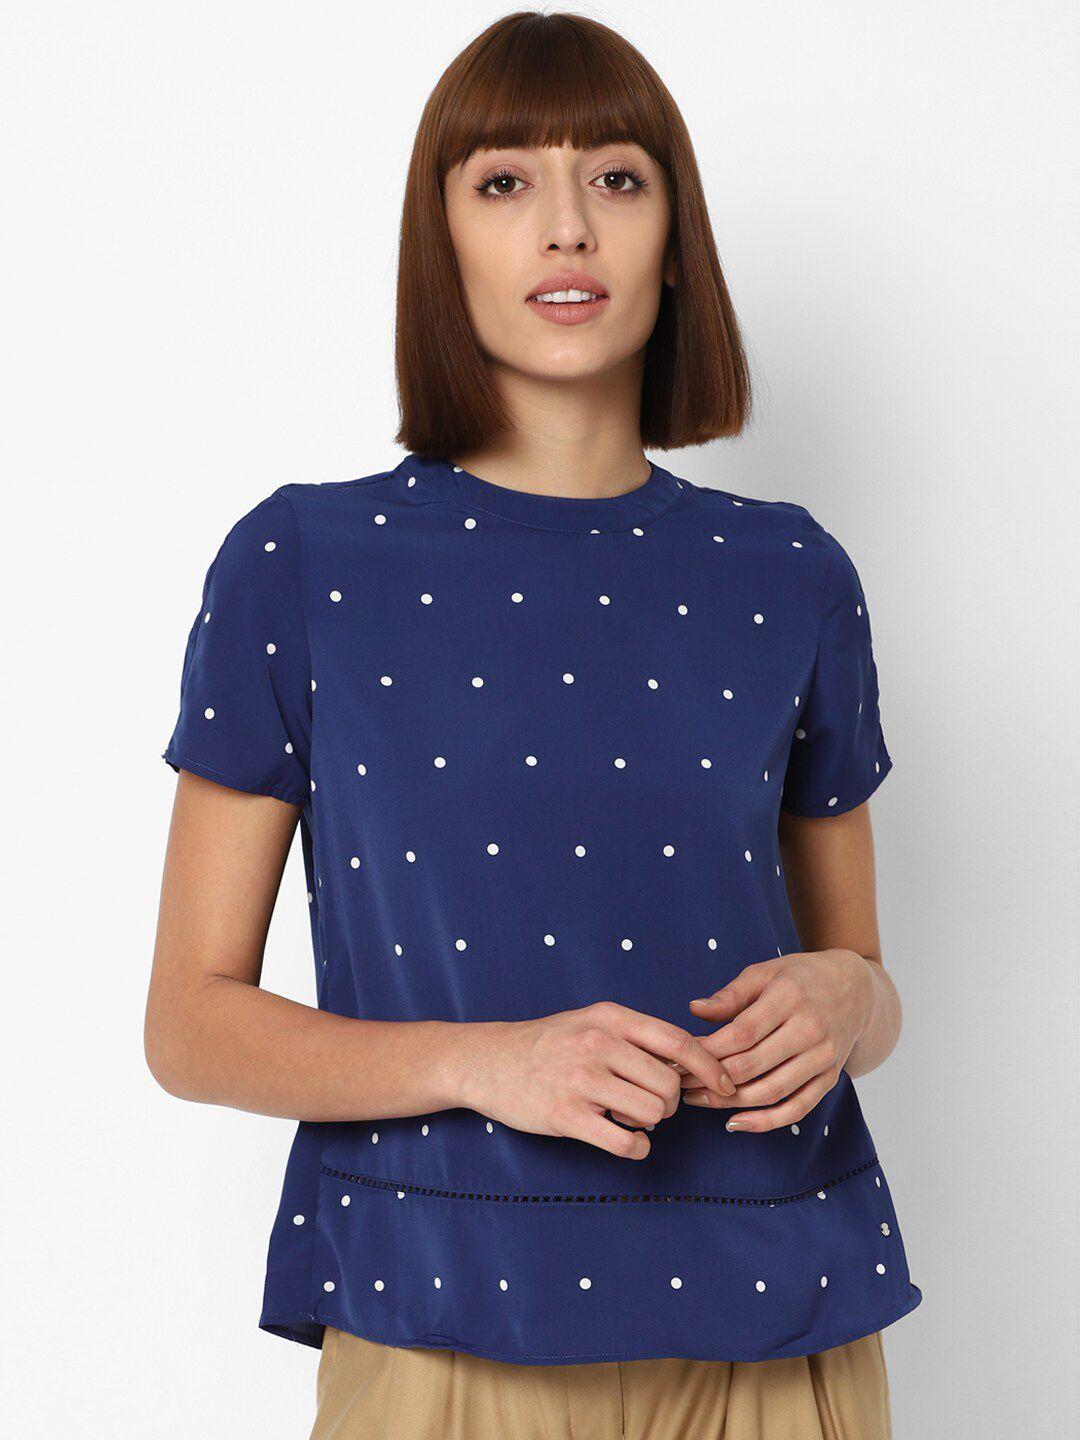 allen-solly-woman-navy-blue-&-white-polka-dots-printed-regular-top